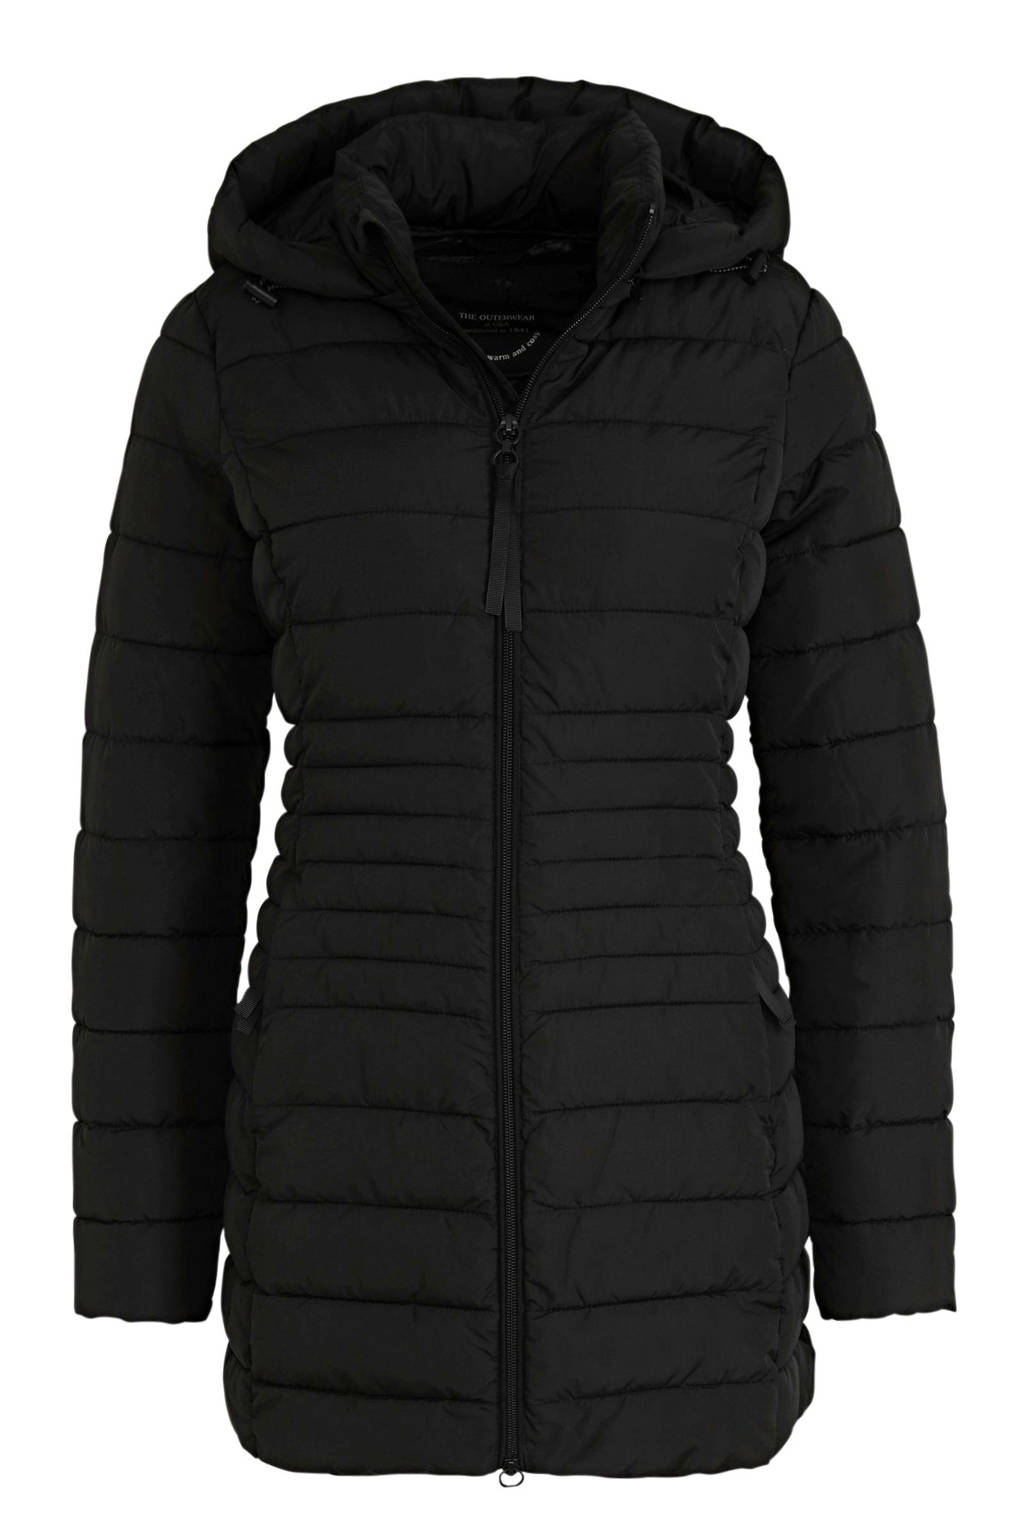 Regulatie Bijlage Asser C&A The Outerwear gewatteerde jas zwart | wehkamp